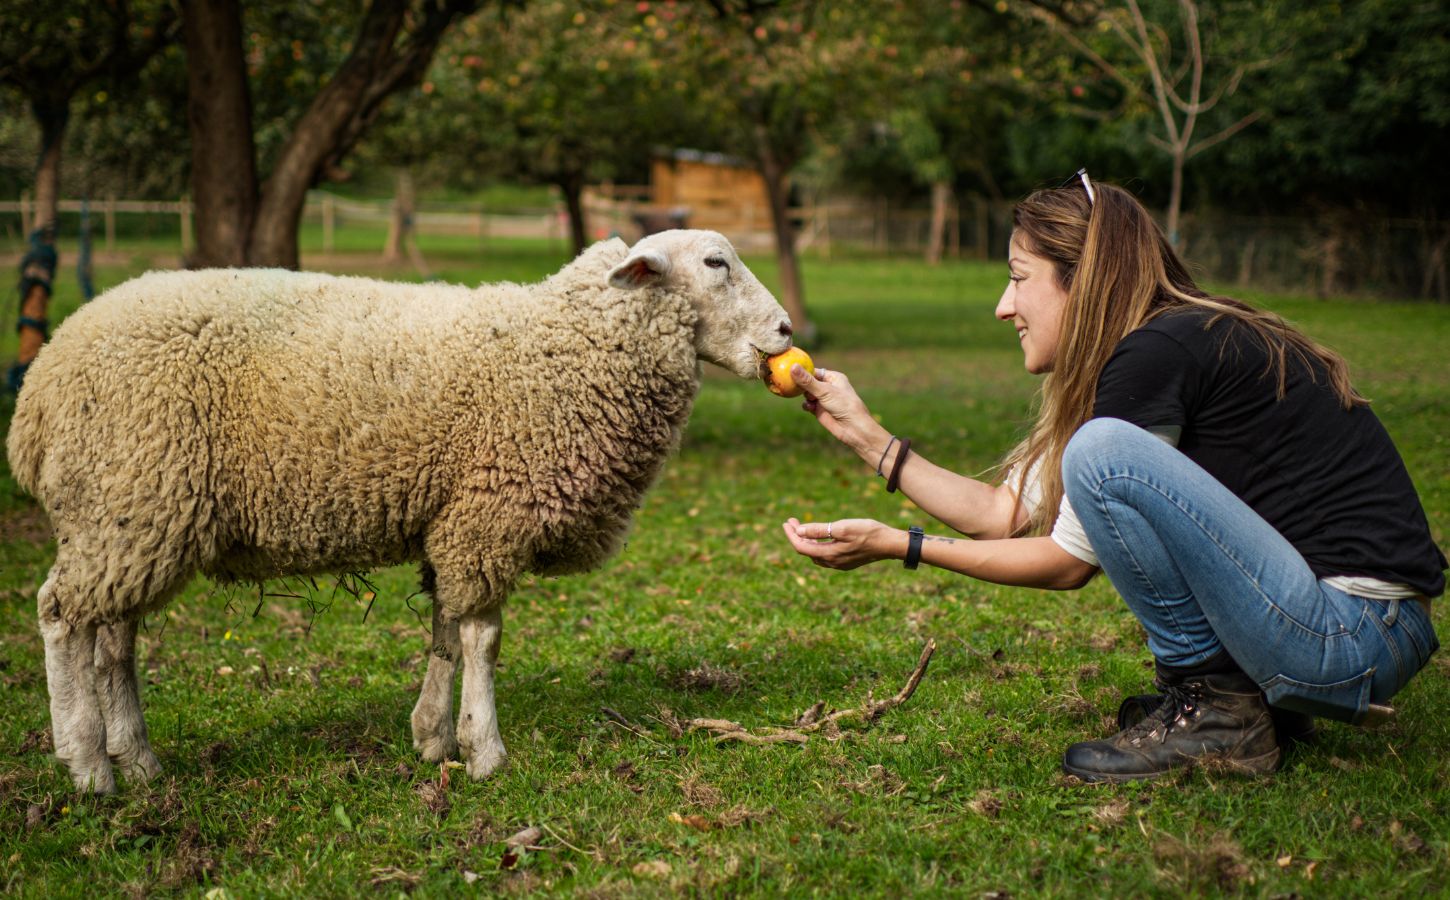 An animal activist feeding a sheep a piece of fruit